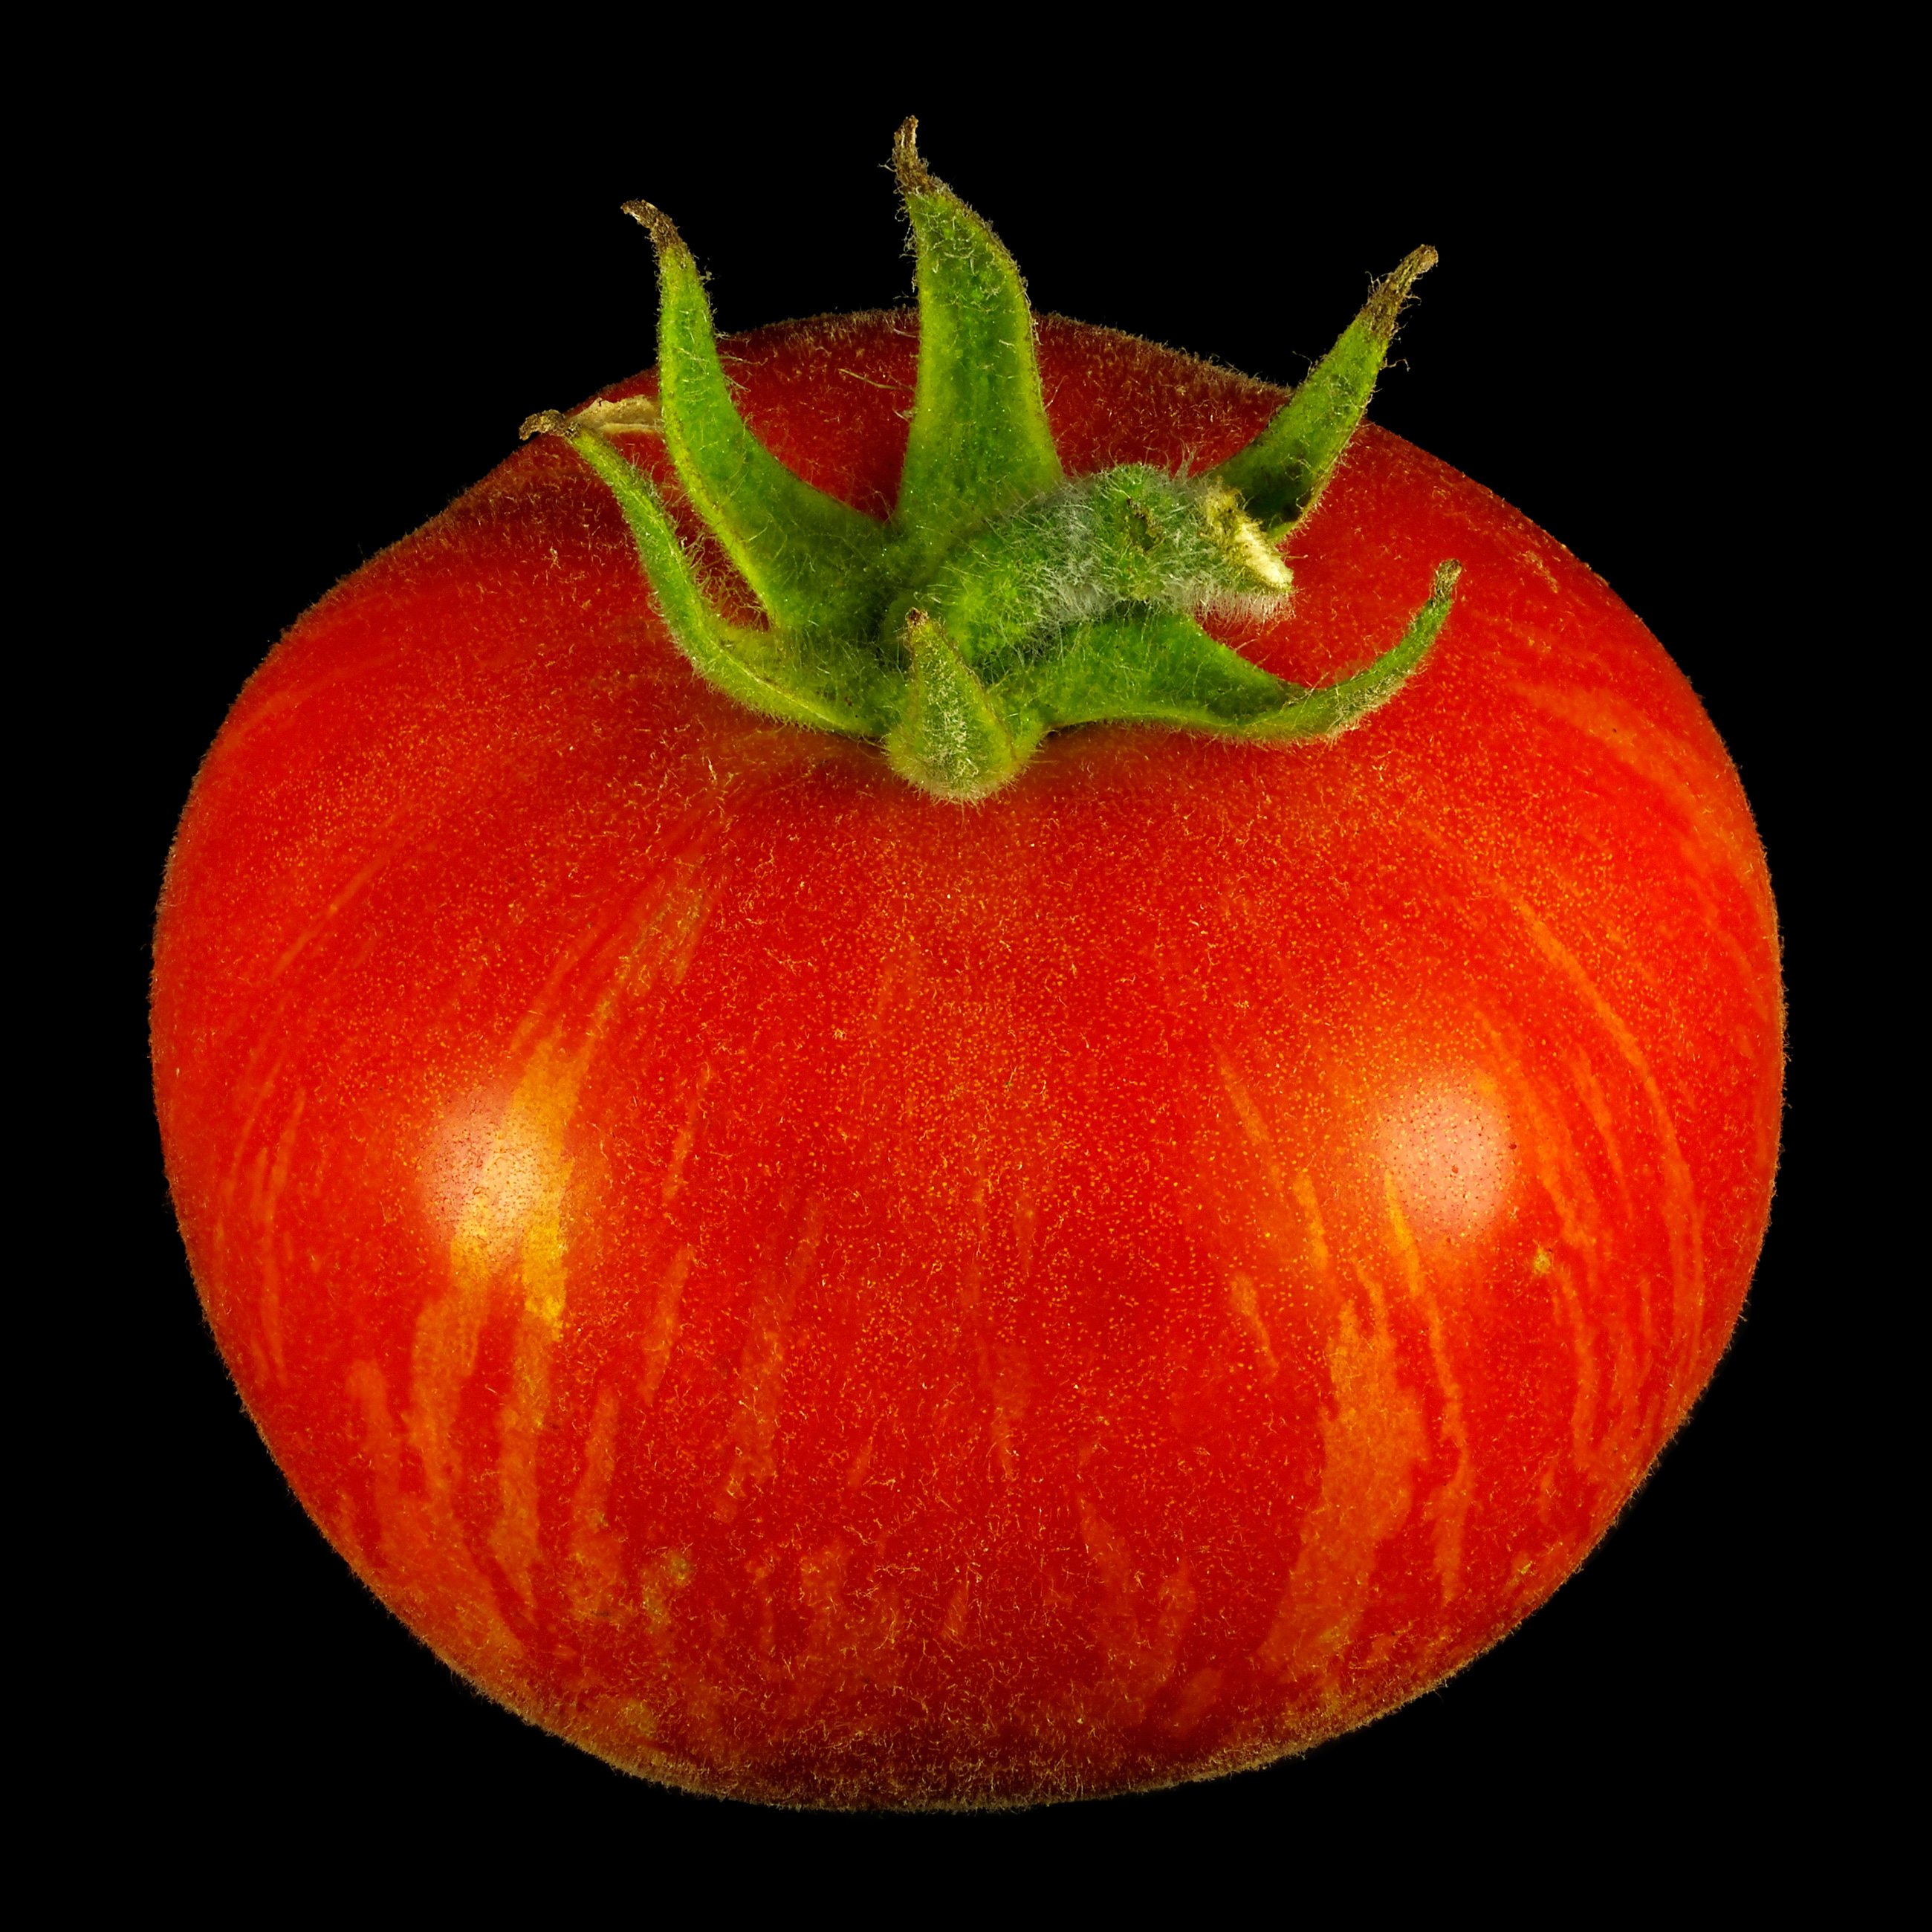 Elberta Girl Tomato: Solanum lycopersicum ‘Elberta Girl’